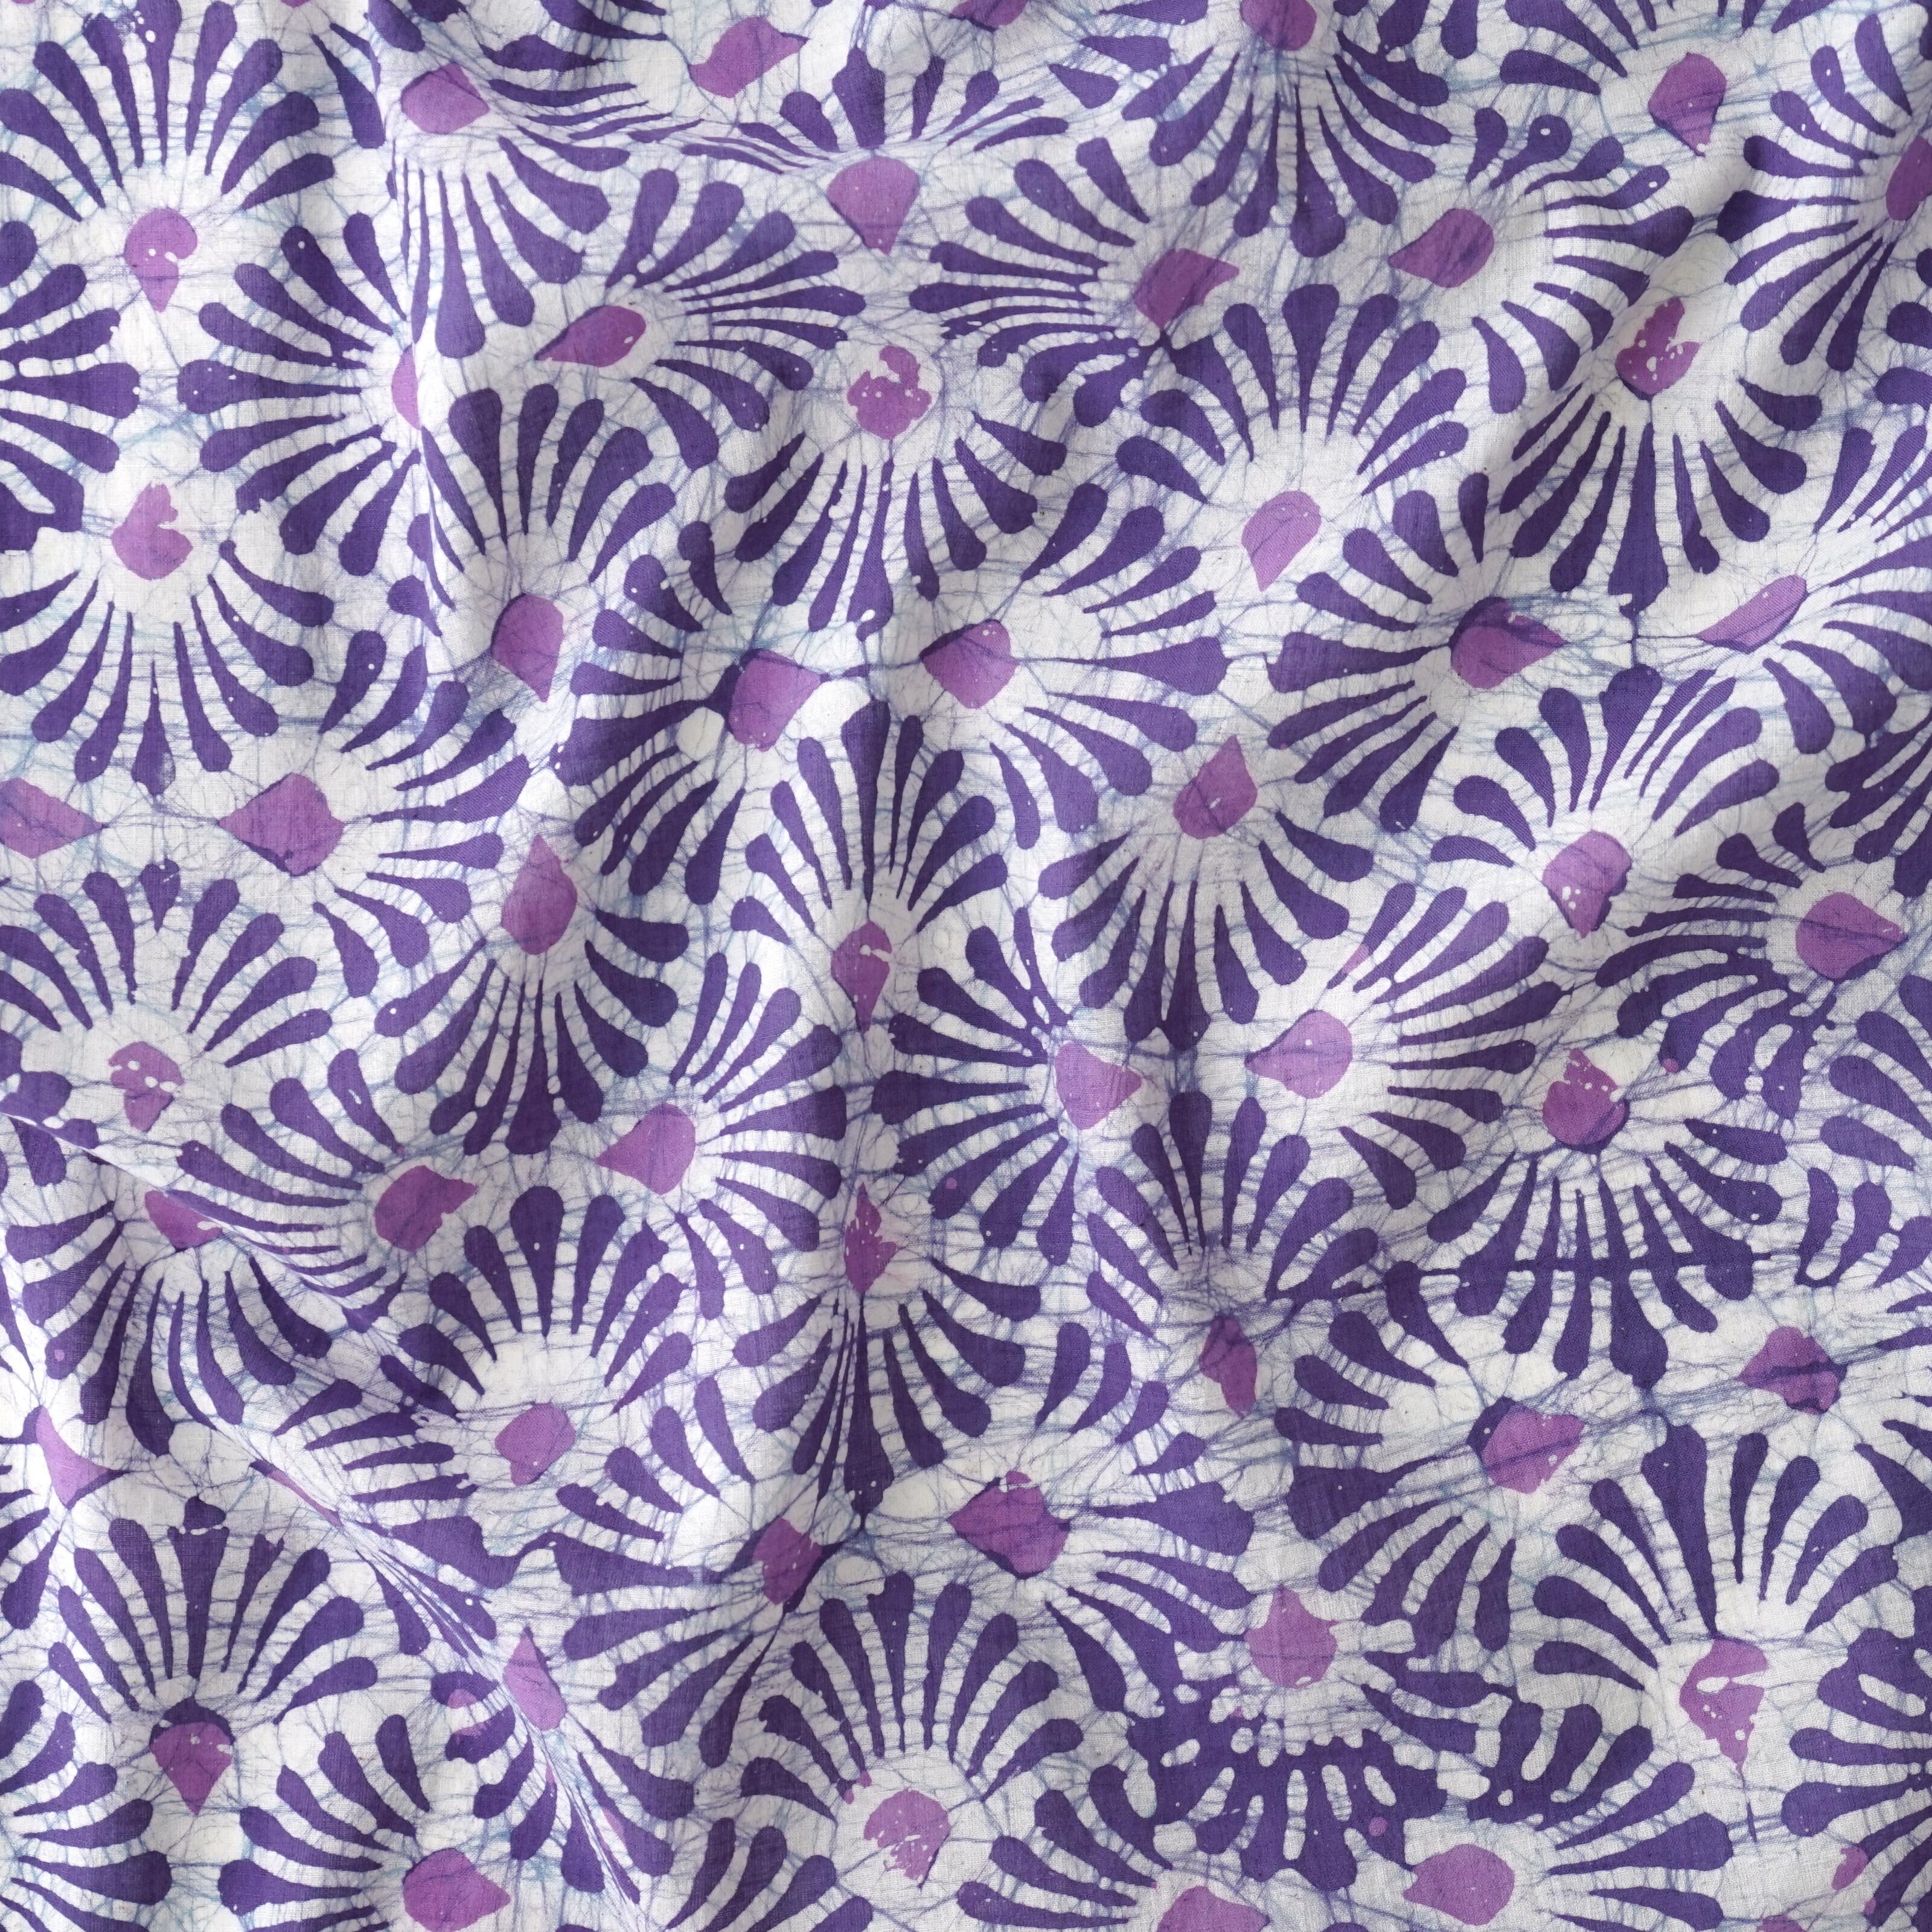 100% Block-Printed Batik Cotton Fabric From India - Castanets Design - Purple Reactive Dye - Contrast